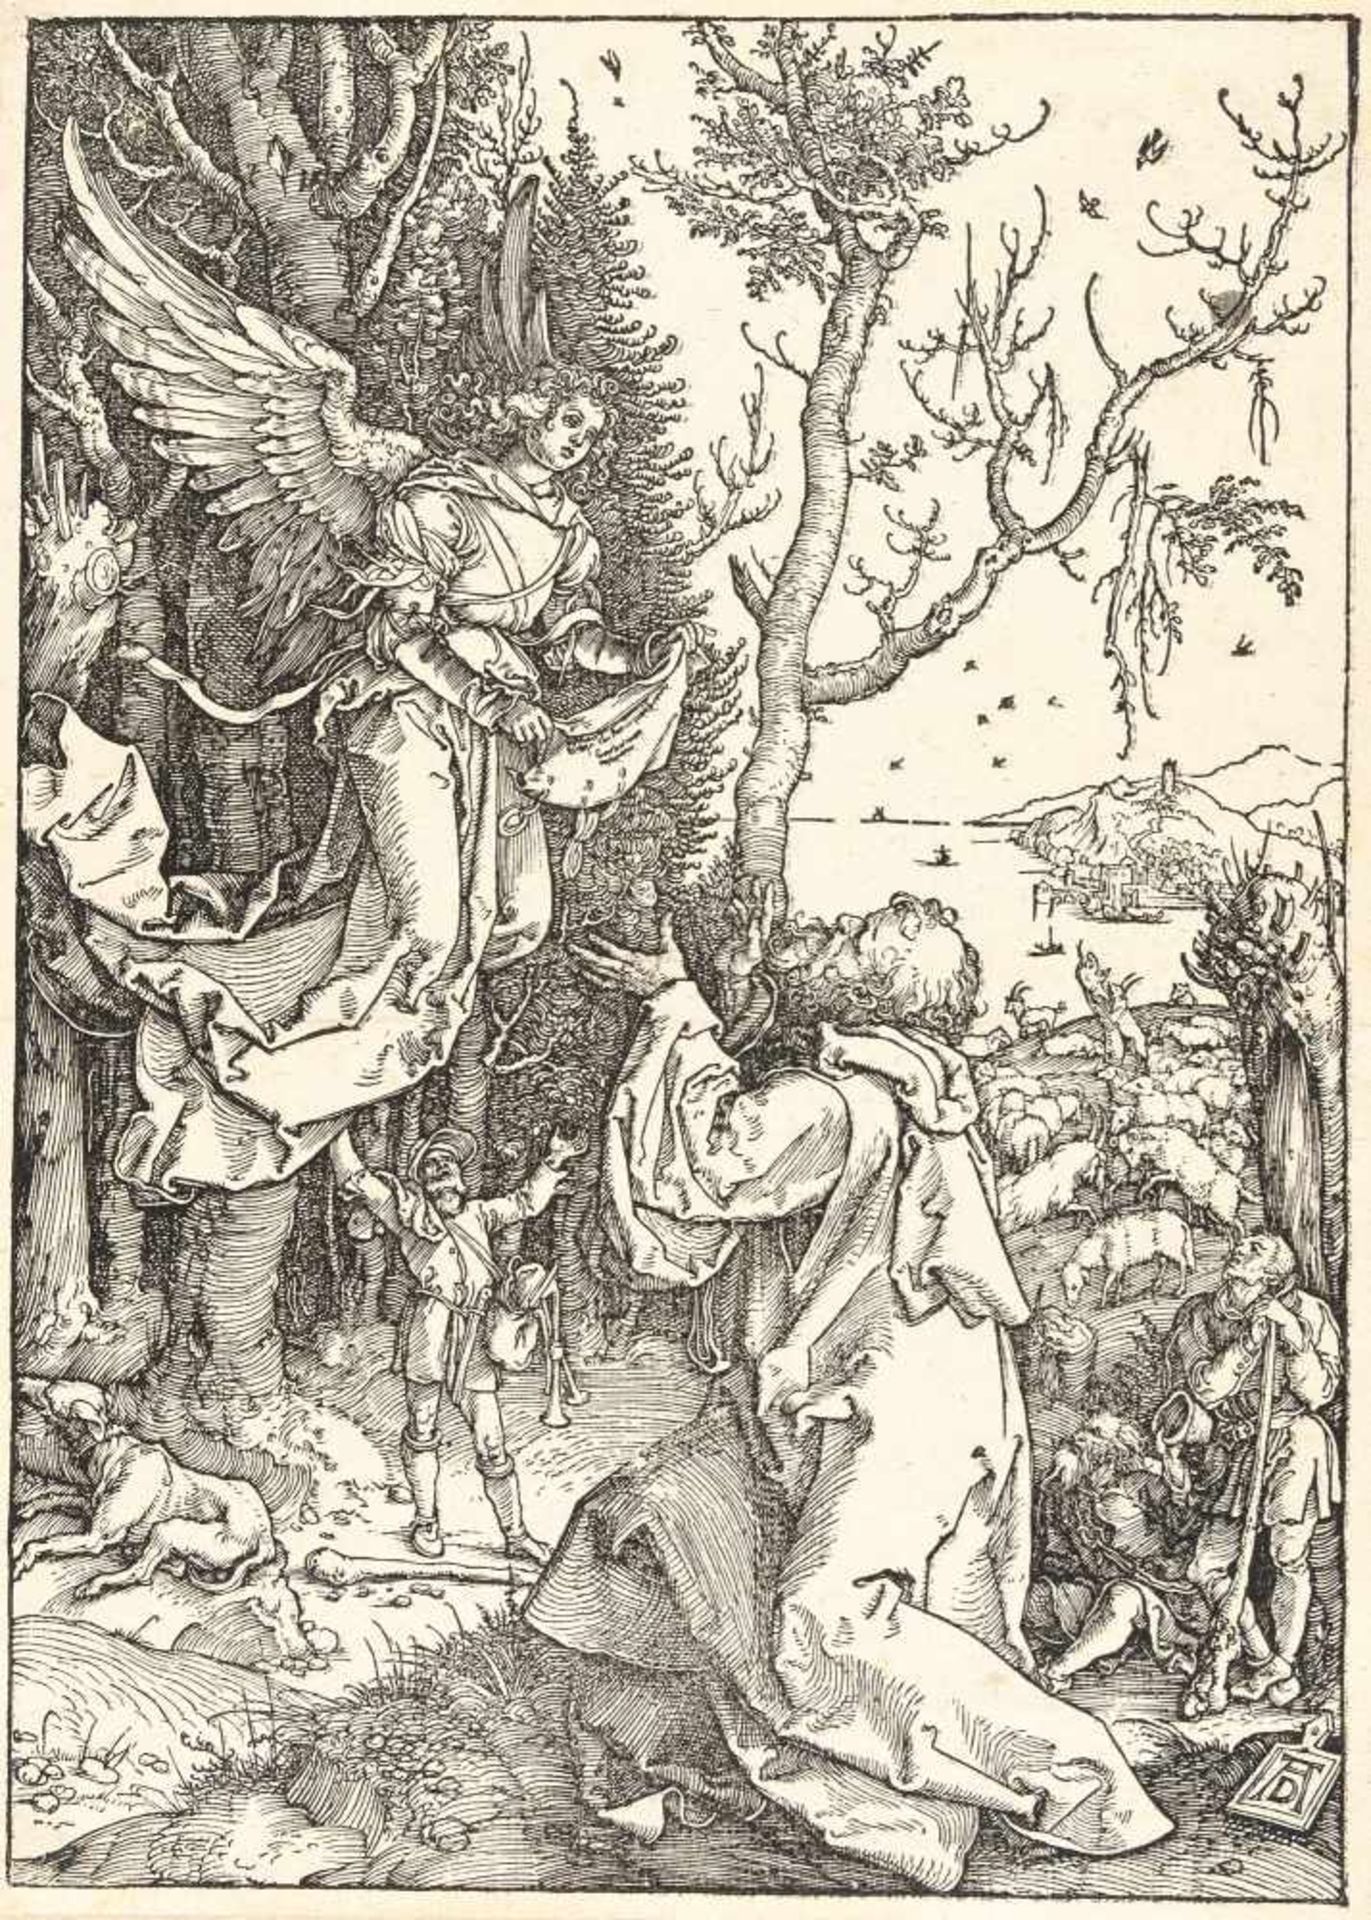 Albrecht Dürer1471 - Nuremberg - 1528Joachim auf dem FeldeHolzschnitt auf Bütten mit angeschnittenem